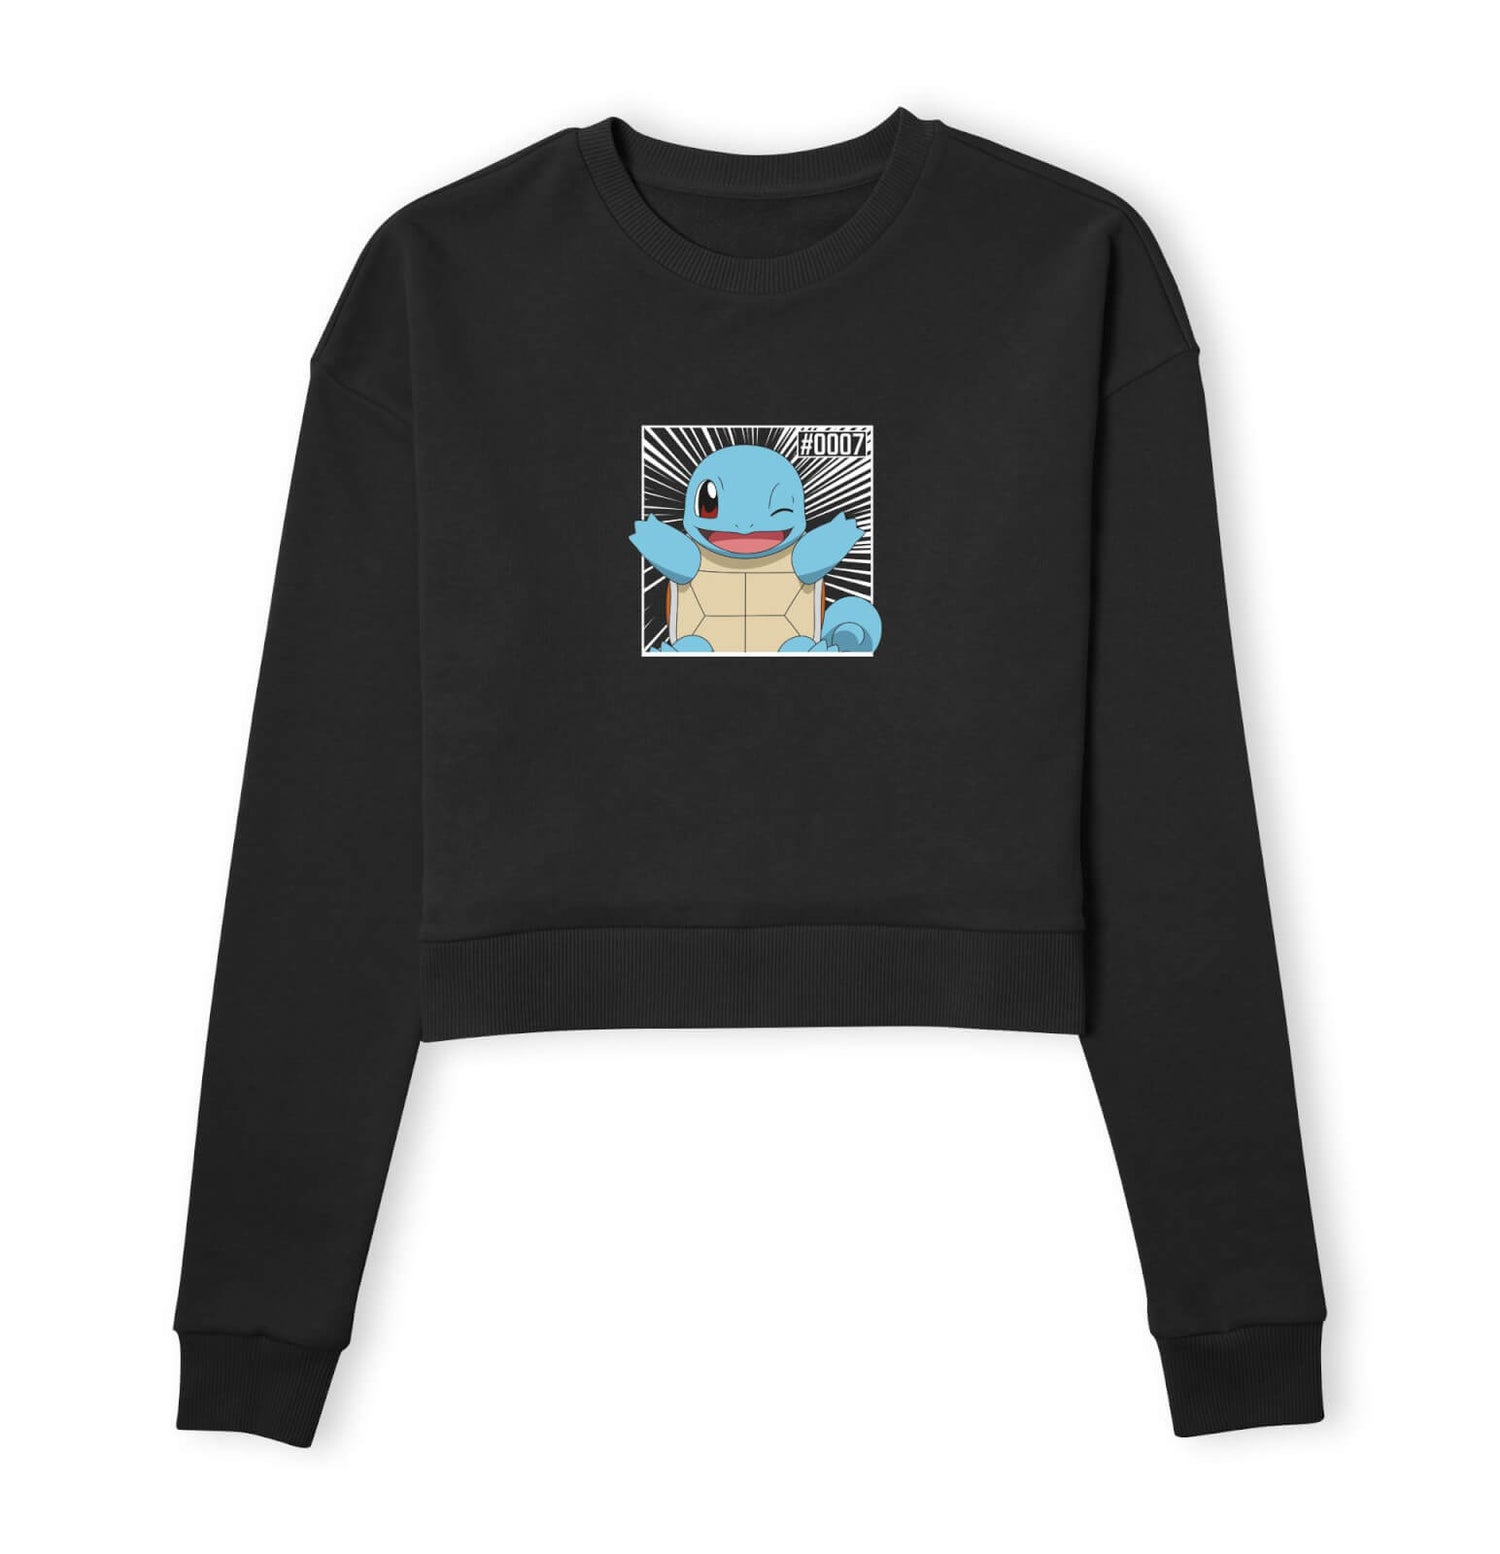 Pokémon Pokédex Squirtle #0007 Women's Cropped Sweatshirt - Black